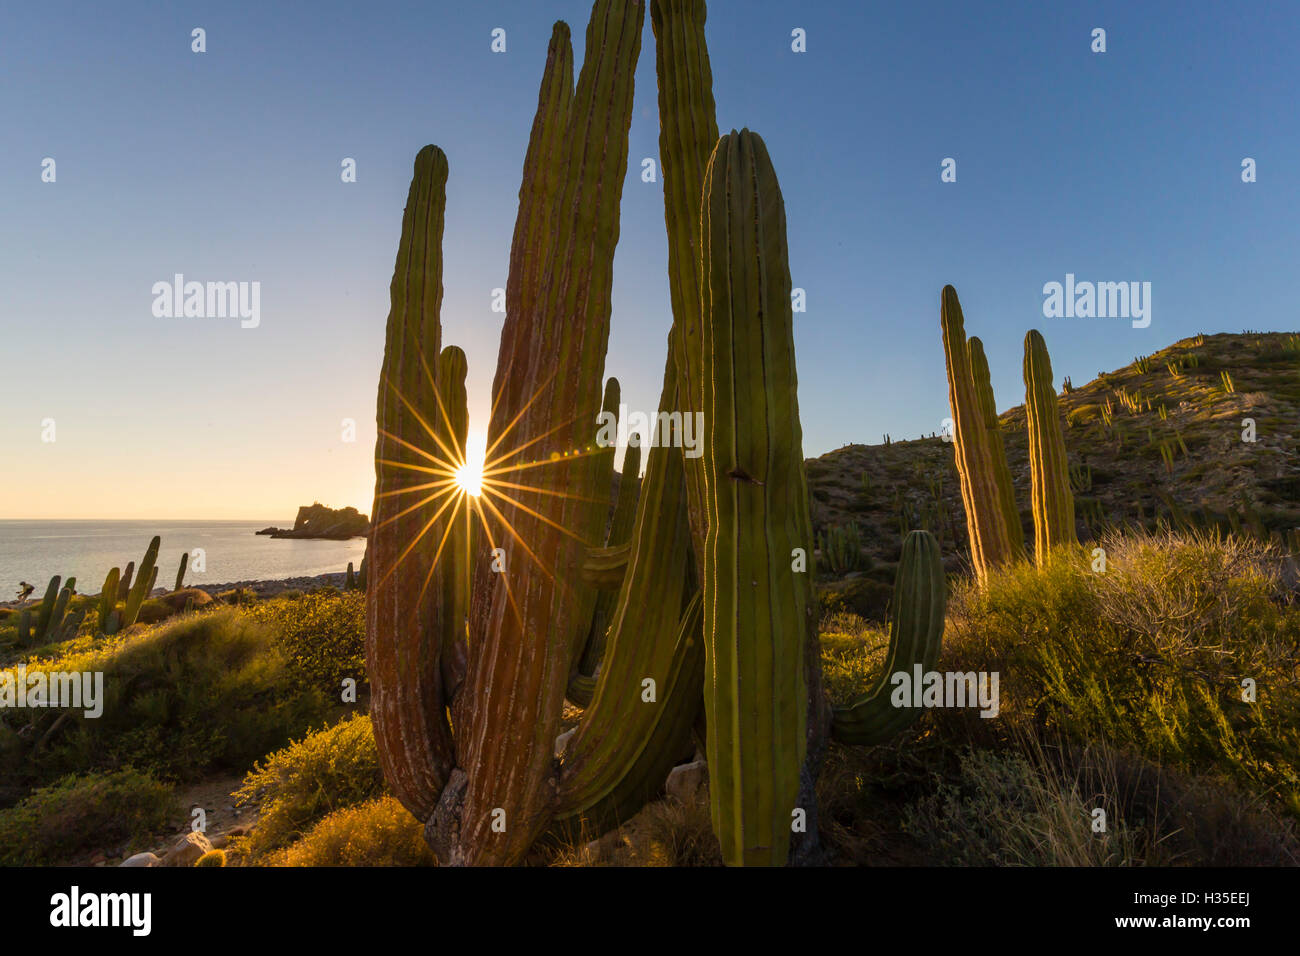 Cardon cactus (Pachycereus pringlei) at sunset on Isla Santa Catalina, Baja California Sur, Mexico Stock Photo